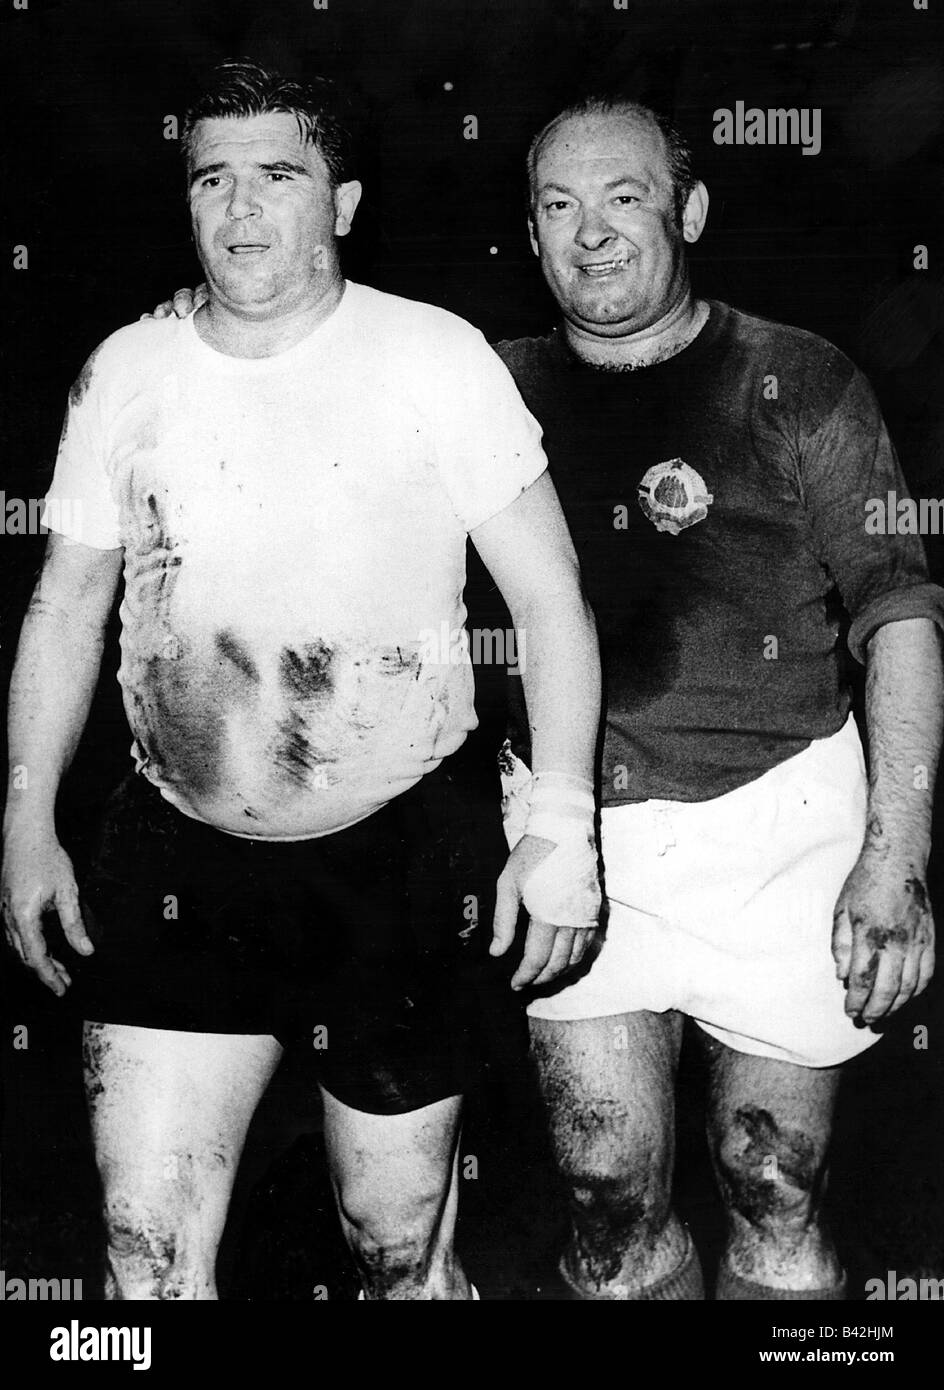 Cajkovski, Zlatko 'Cik', 24.11.1923 - 27.7.1998, Croatian football player and coach, with Ferenz Puskas during pause of th game in Belgrade, 1970, , Stock Photo